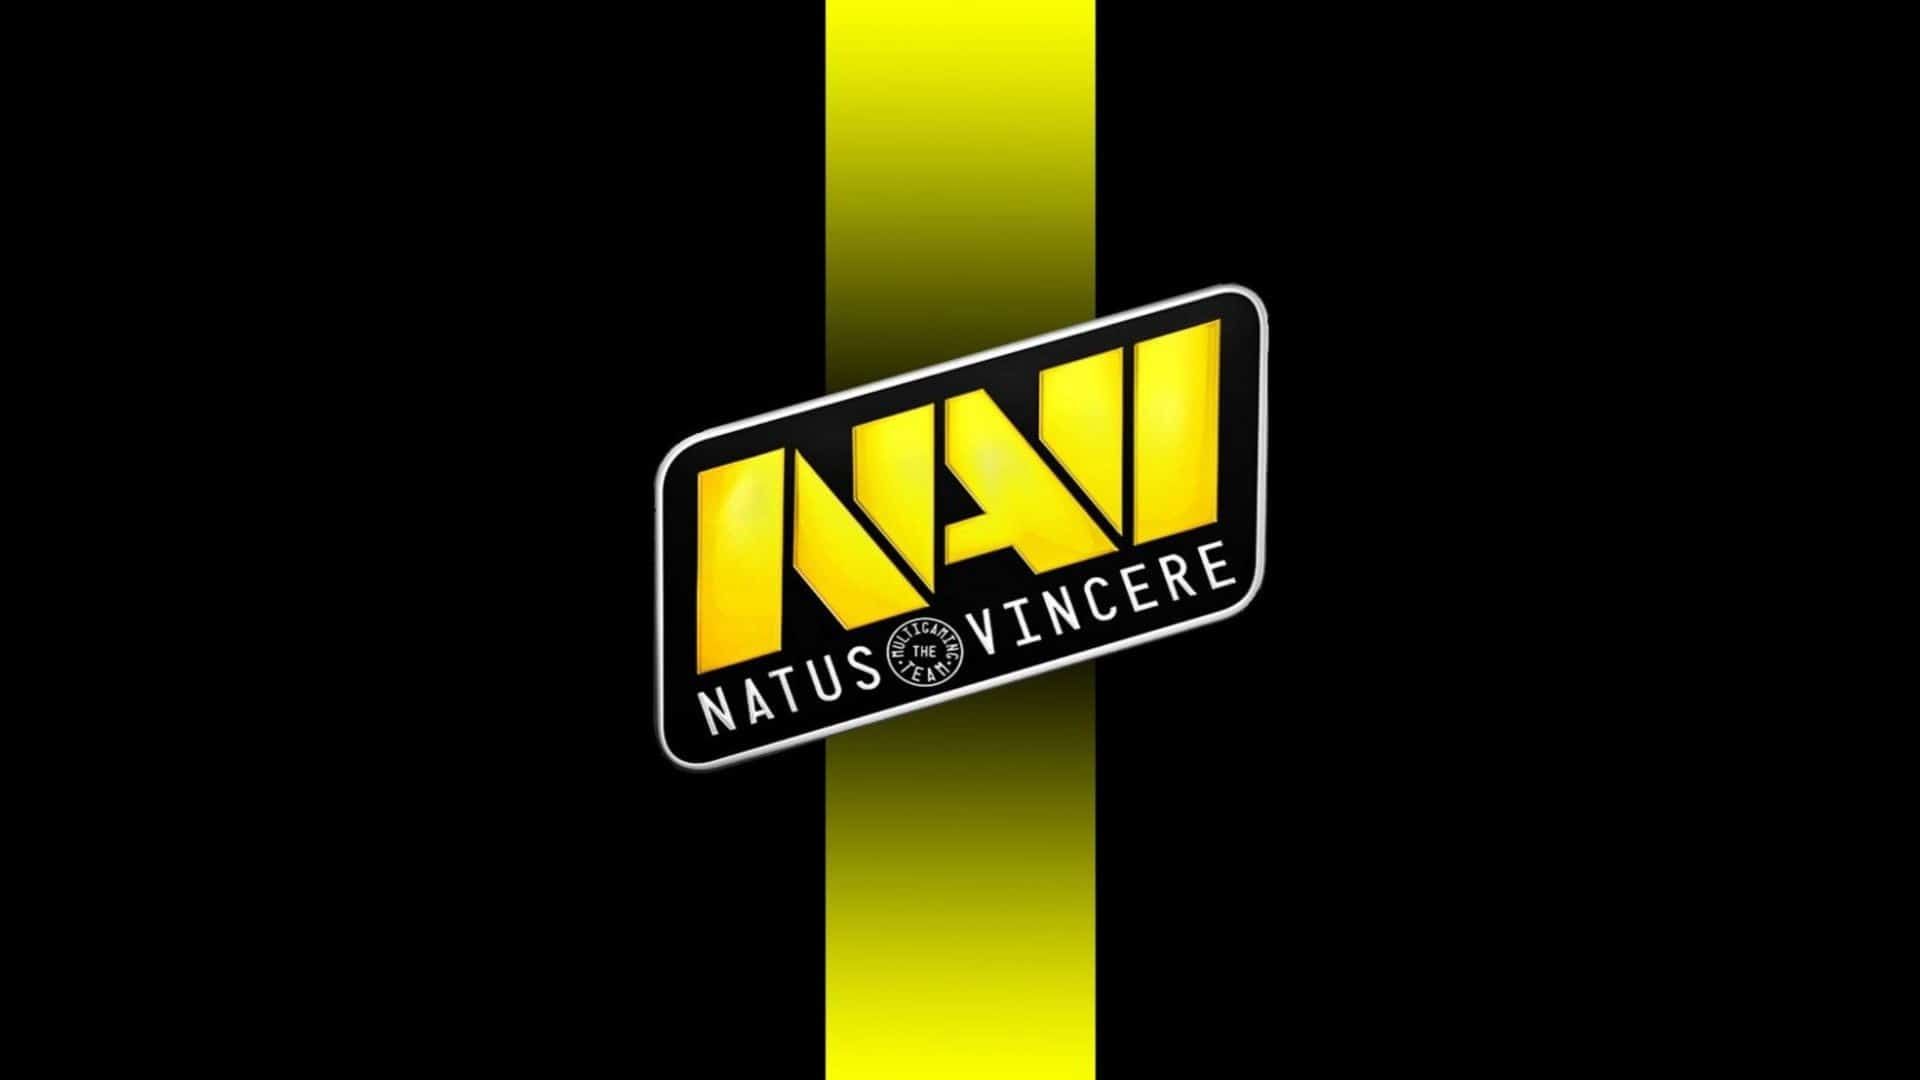 Natus Vincere выпустила специальные токены для фанатов